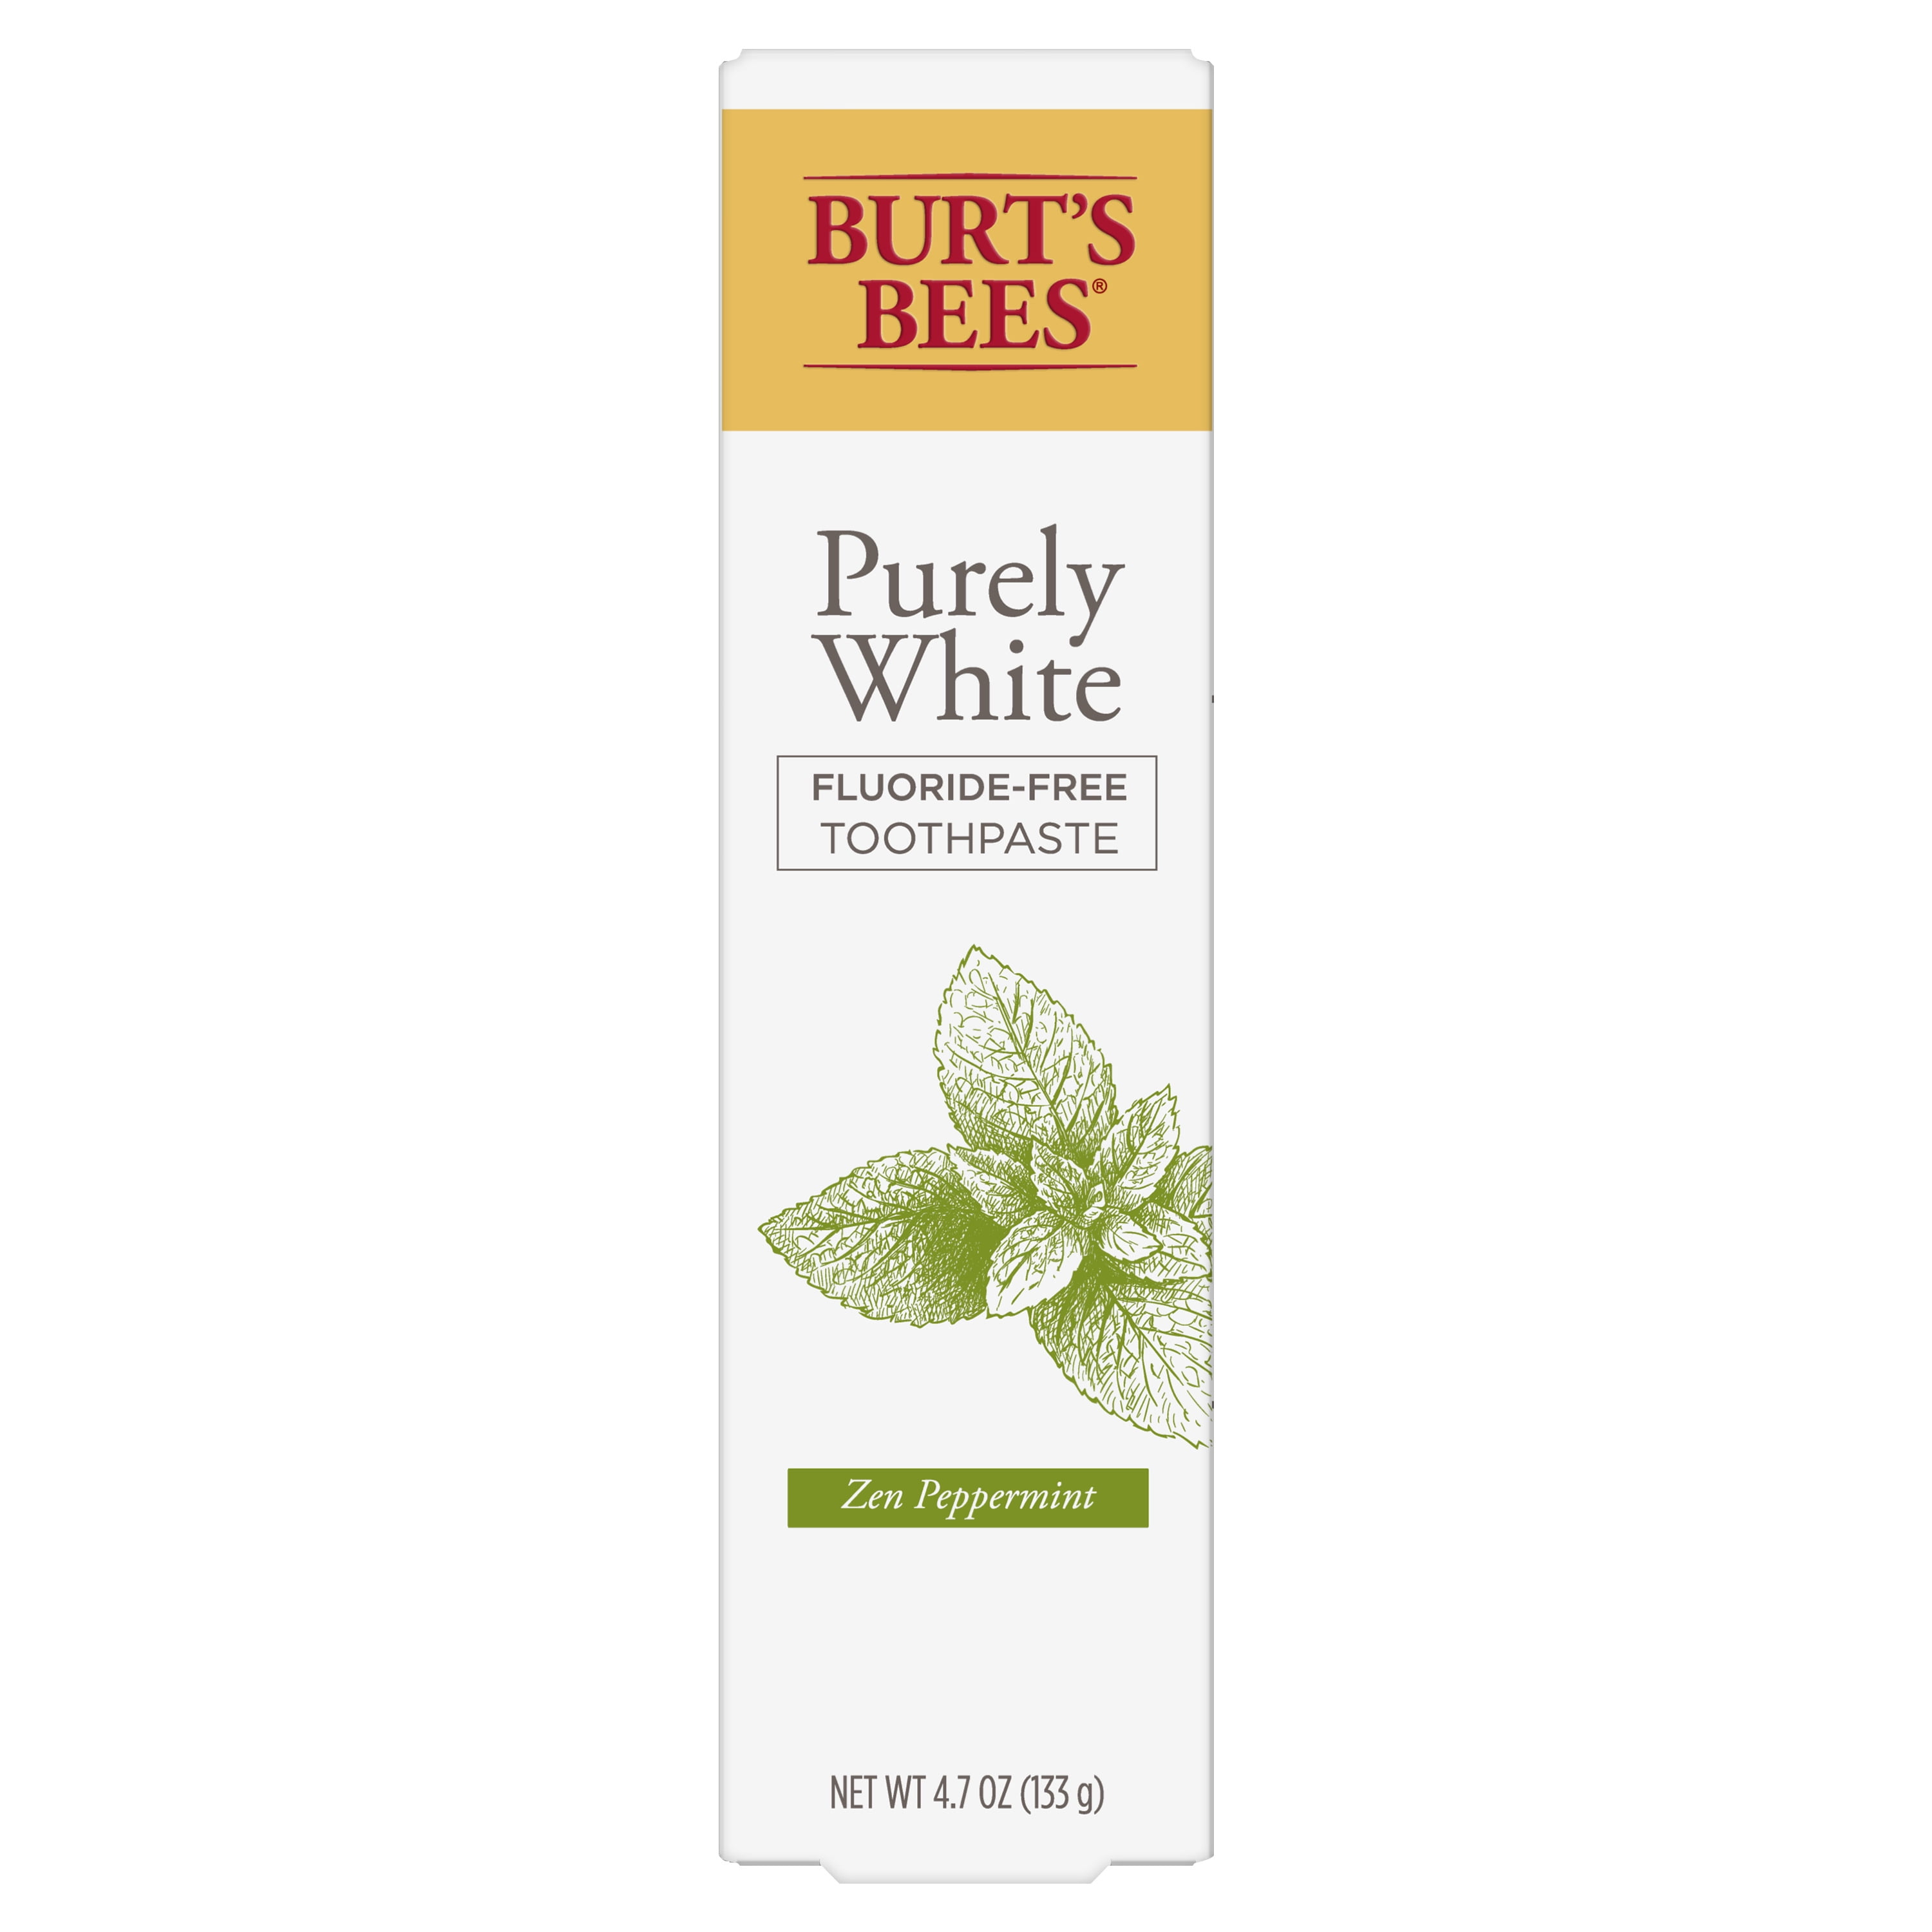 Burt's Bees Purely White Fluoride Free Toothpaste, Peppermint, 4.7 oz